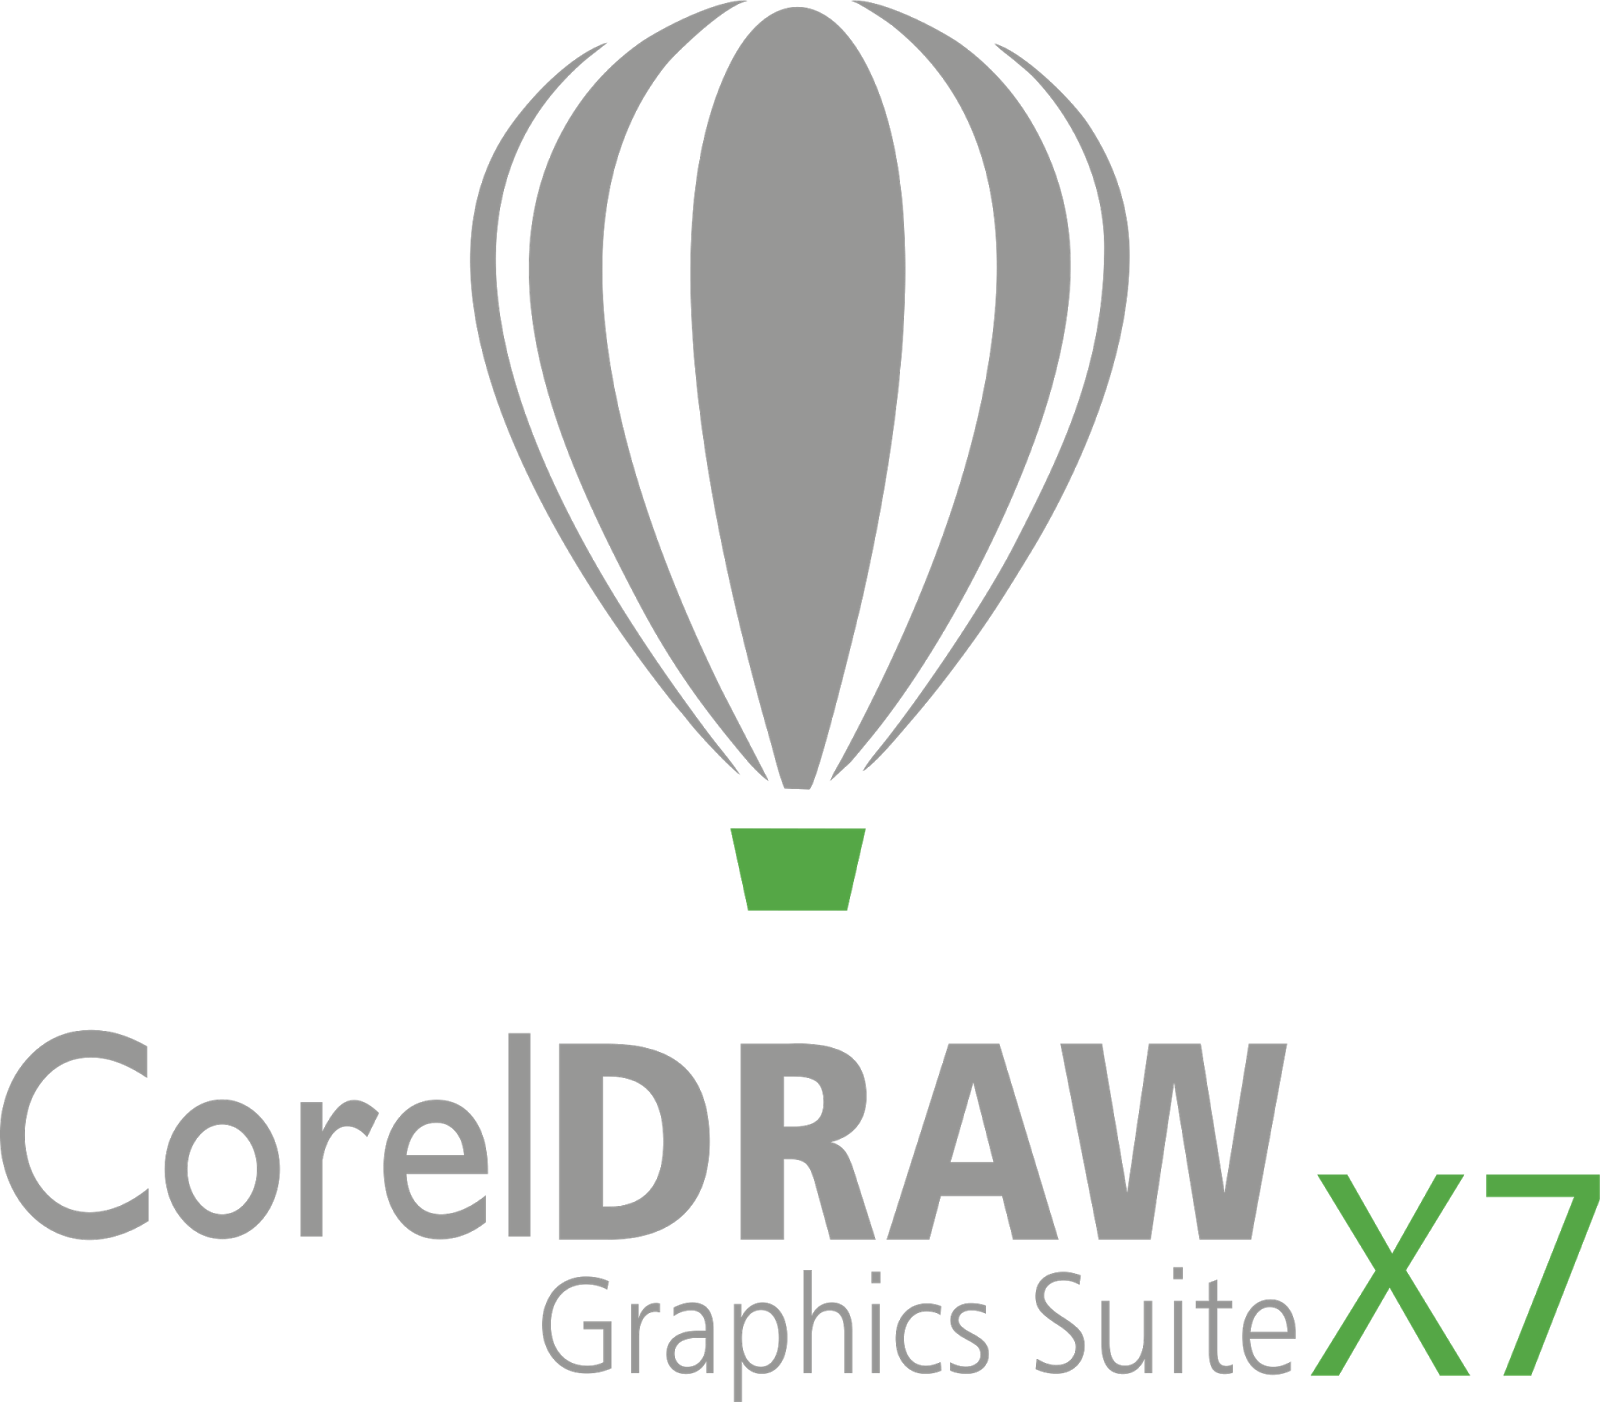 Corel DRAW X7 Crack (32-64bit) Windows 7, 8, 8.1 Download